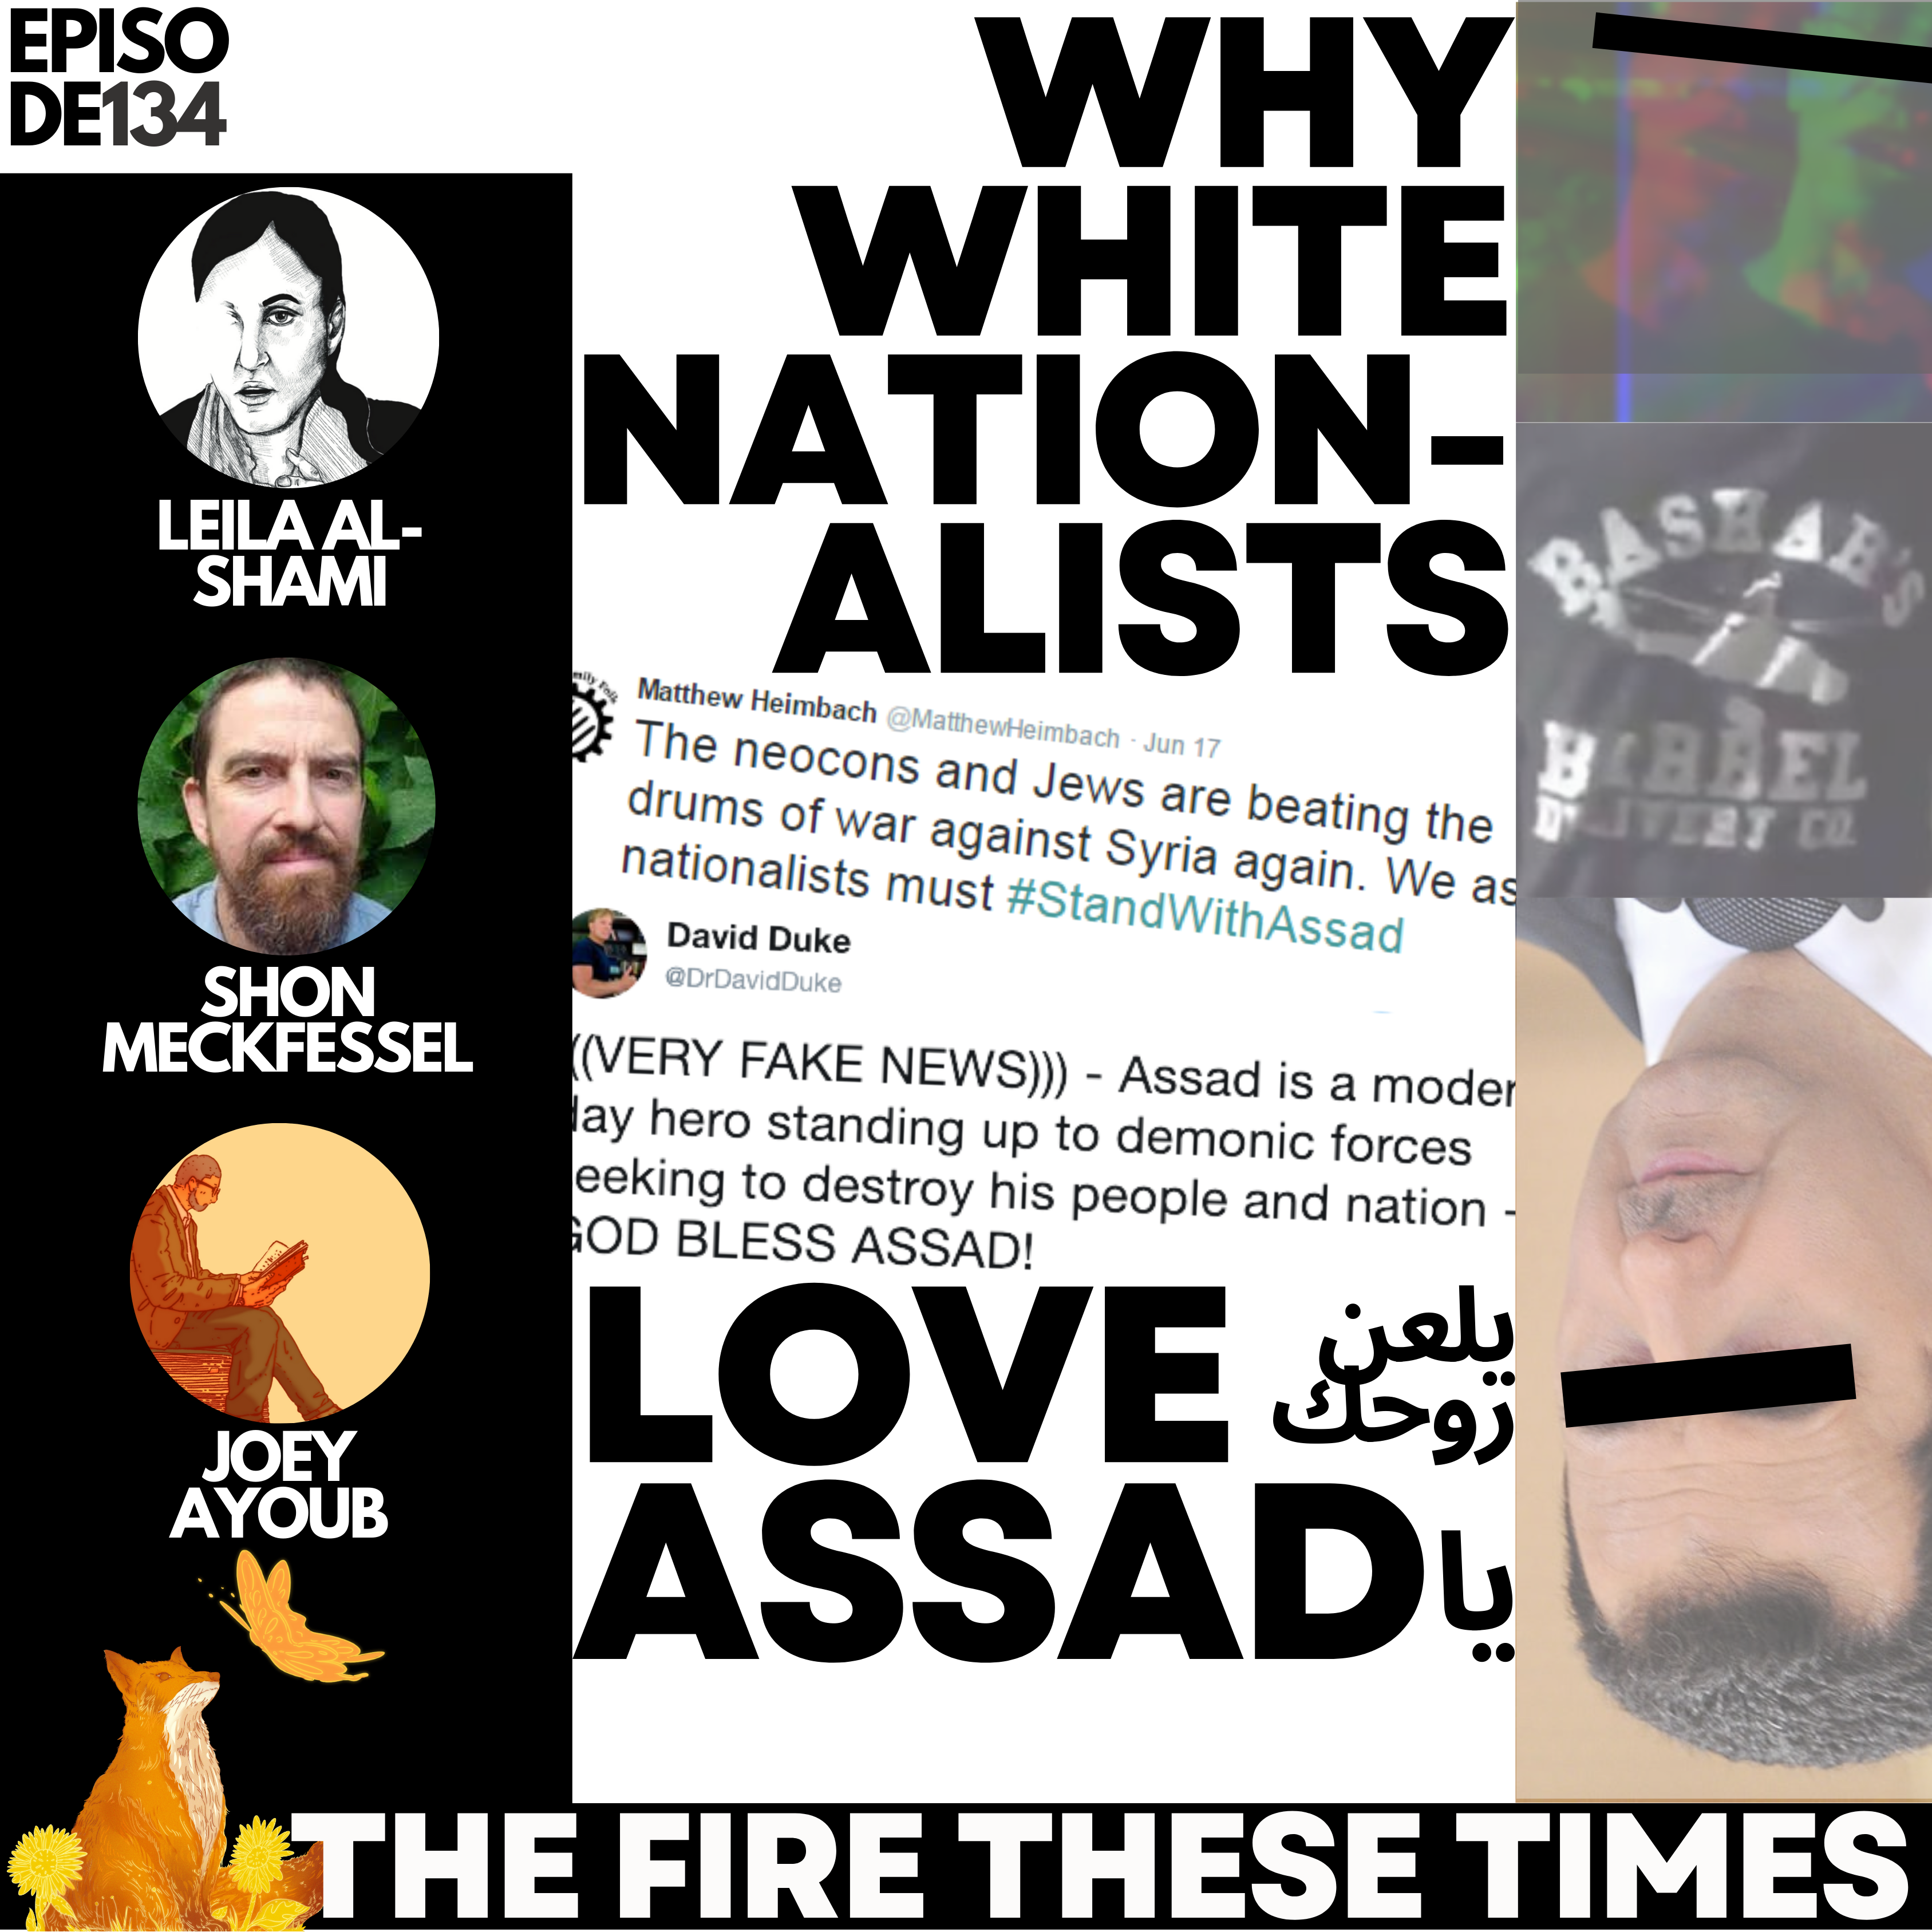 Podcast: Why White Nationalists Love Assad w/ Leila Al-Sami and Shon Meckfessel